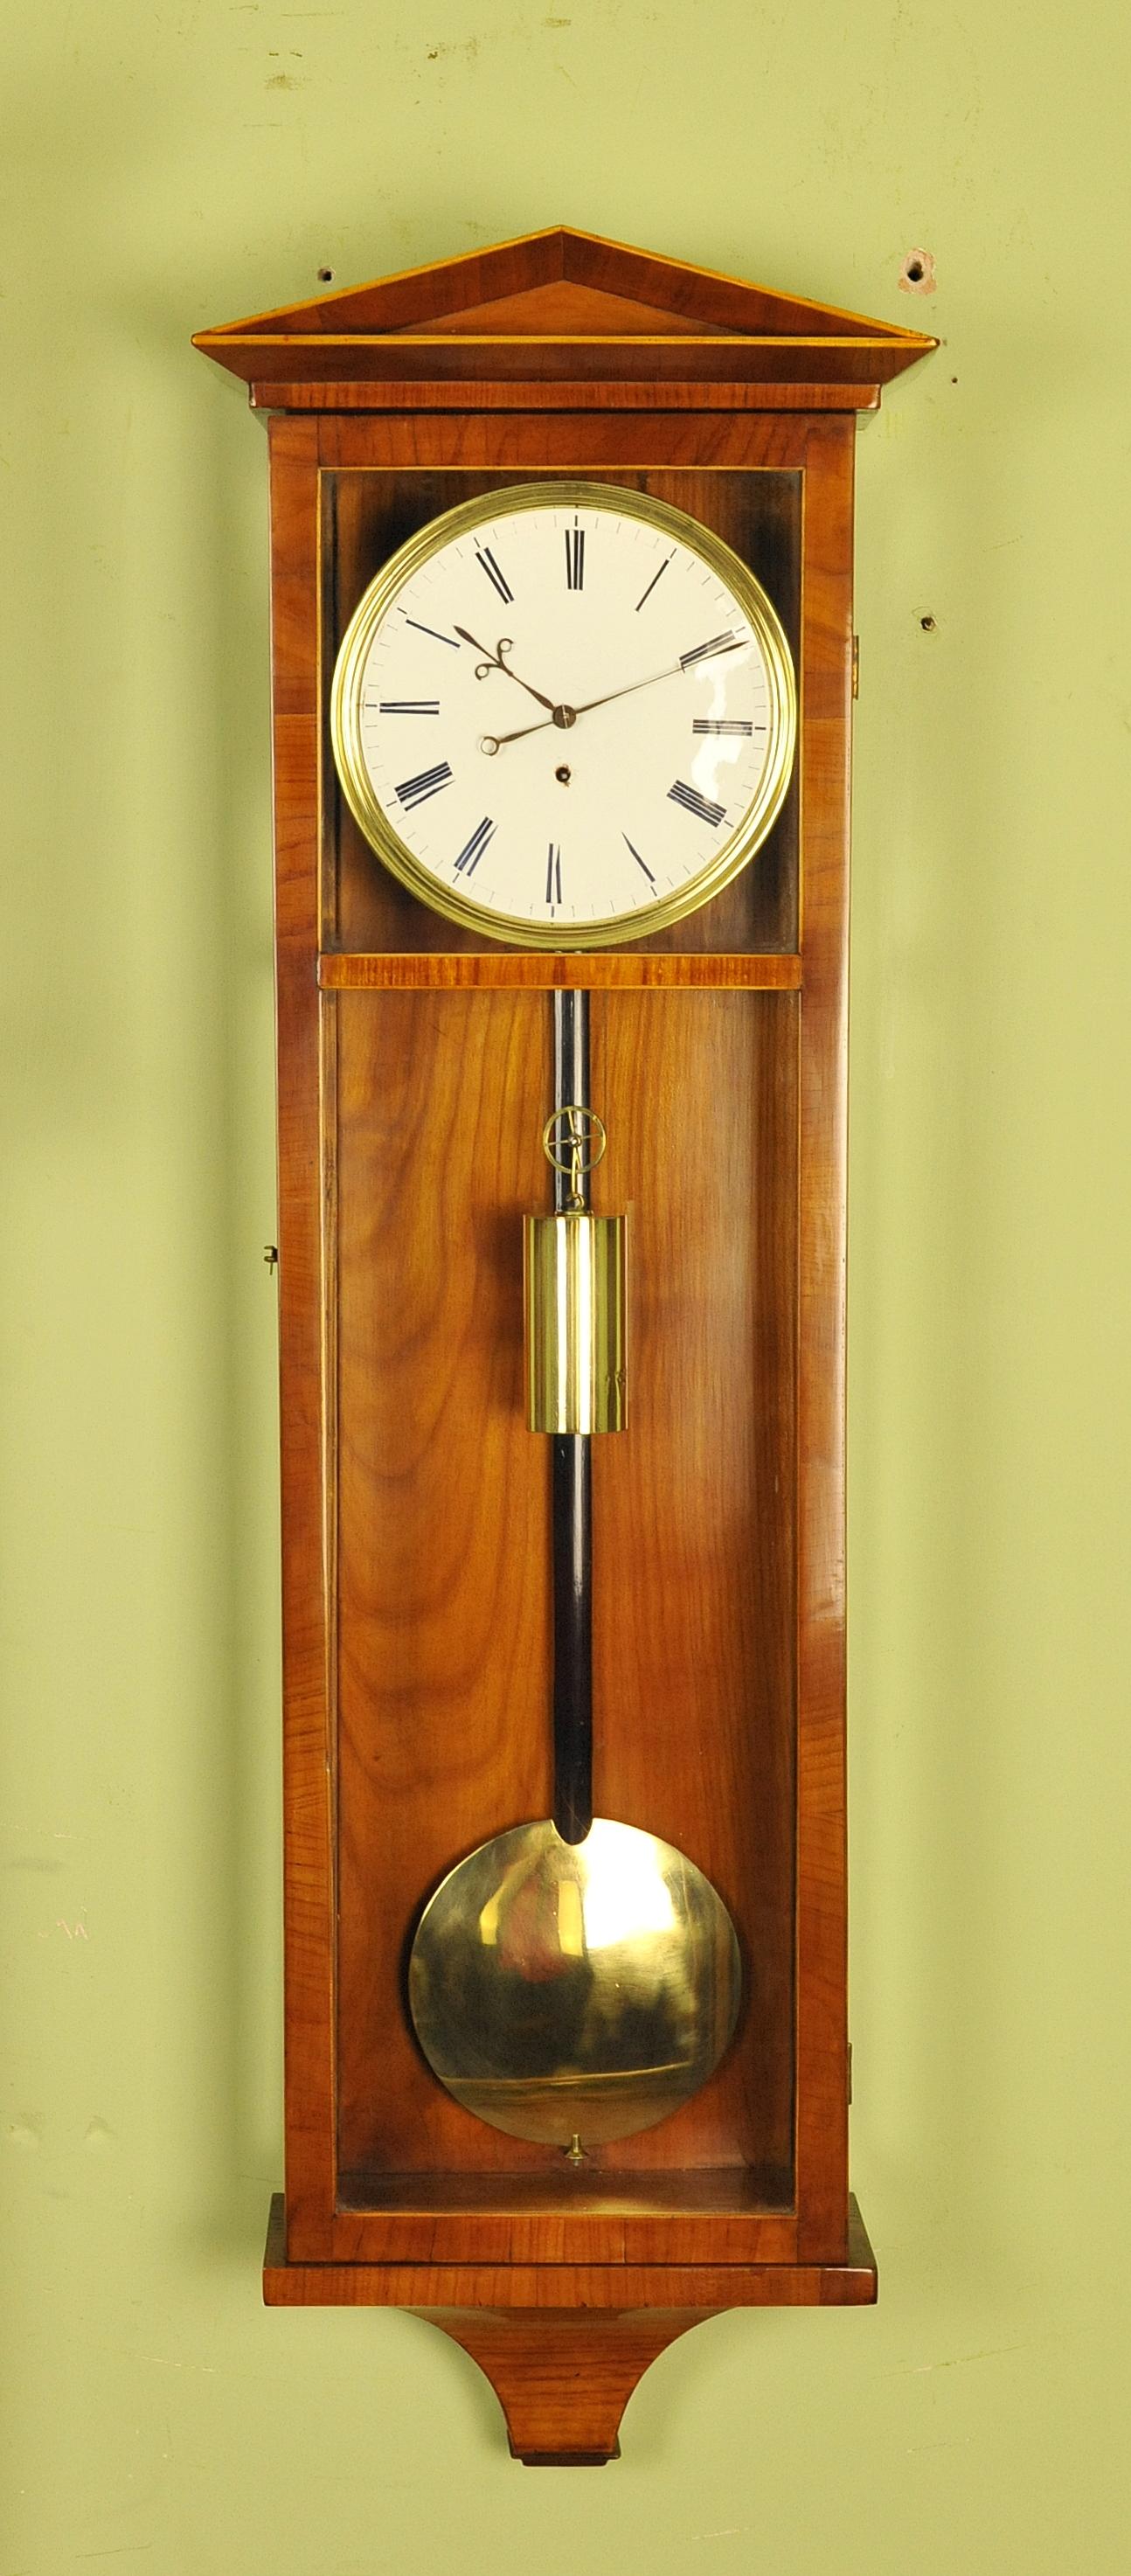 19th Century Satinwood Dachluhr Vienna Regulator Wall Clock For Sale